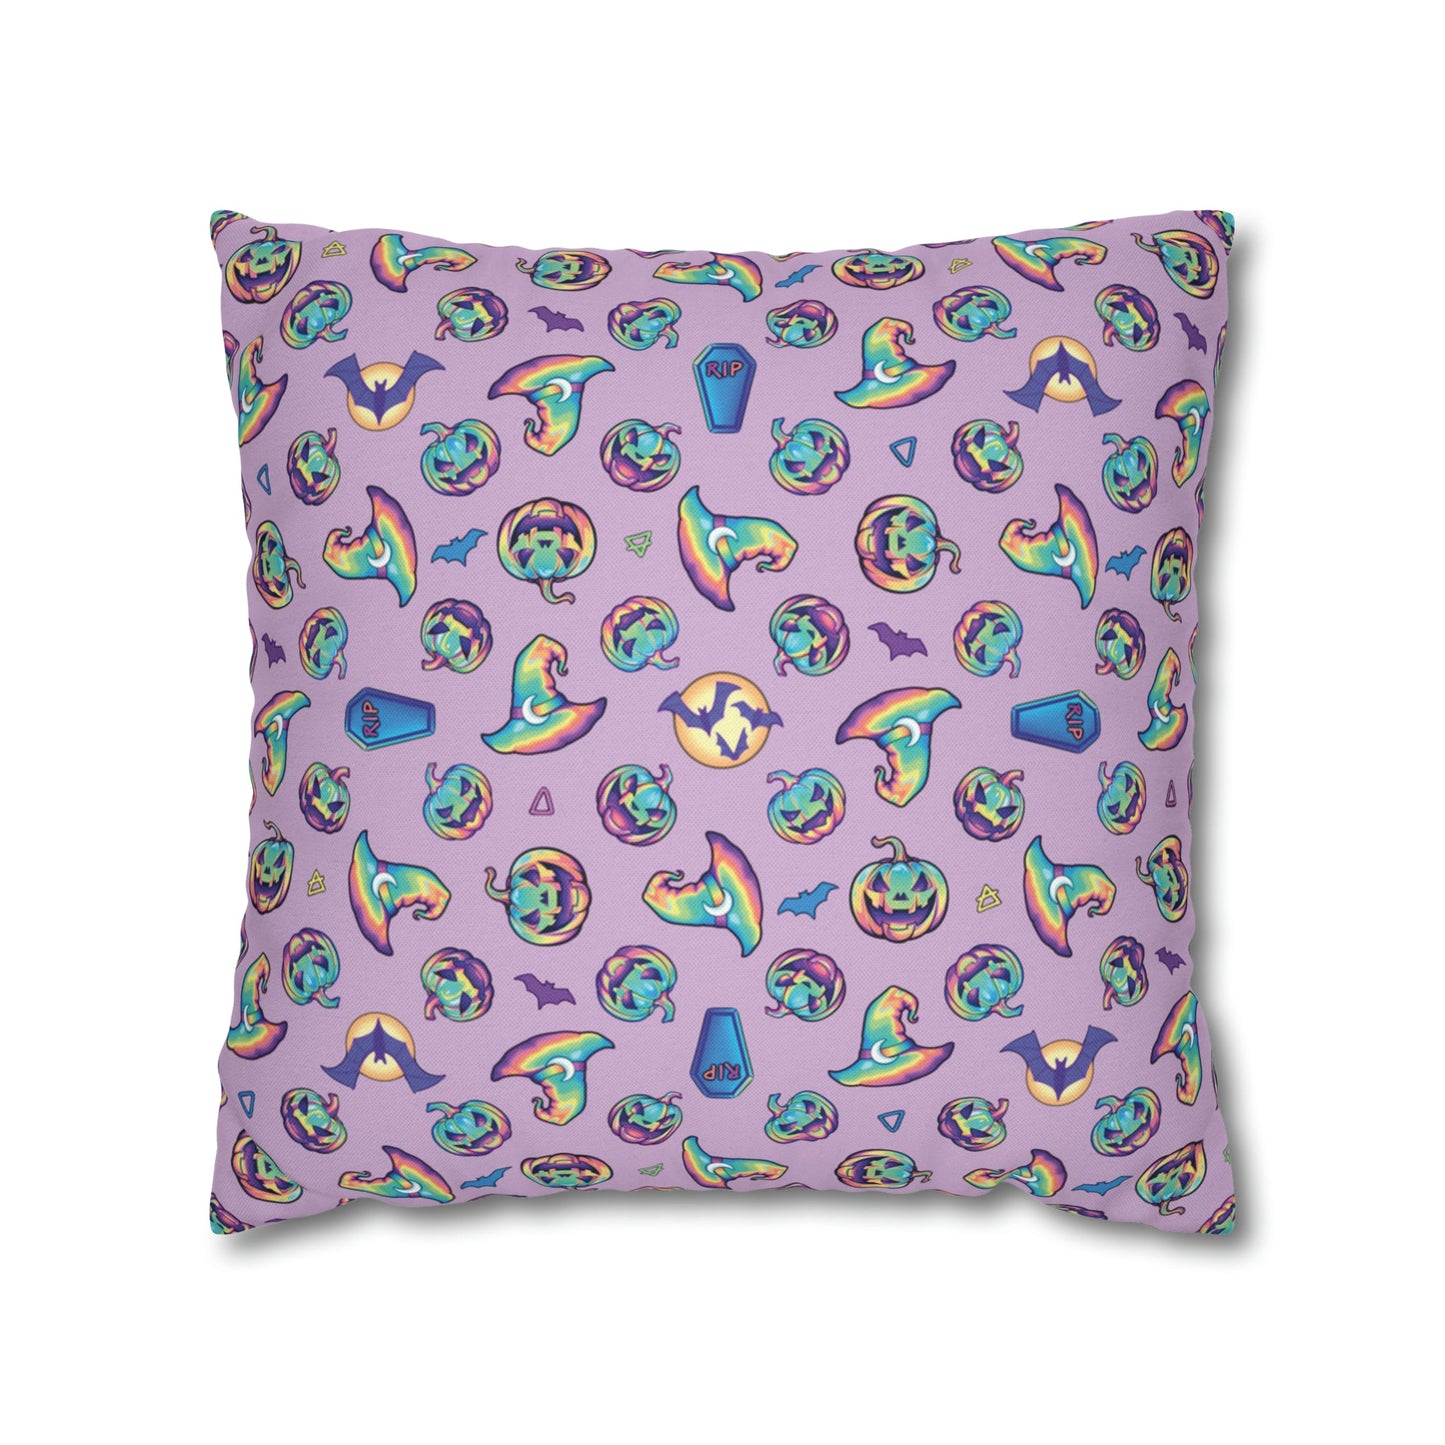 Jack-o’-Lanterns, Bats & Witch Hats Square Pillow Case - Purple - Driftless Enchantments